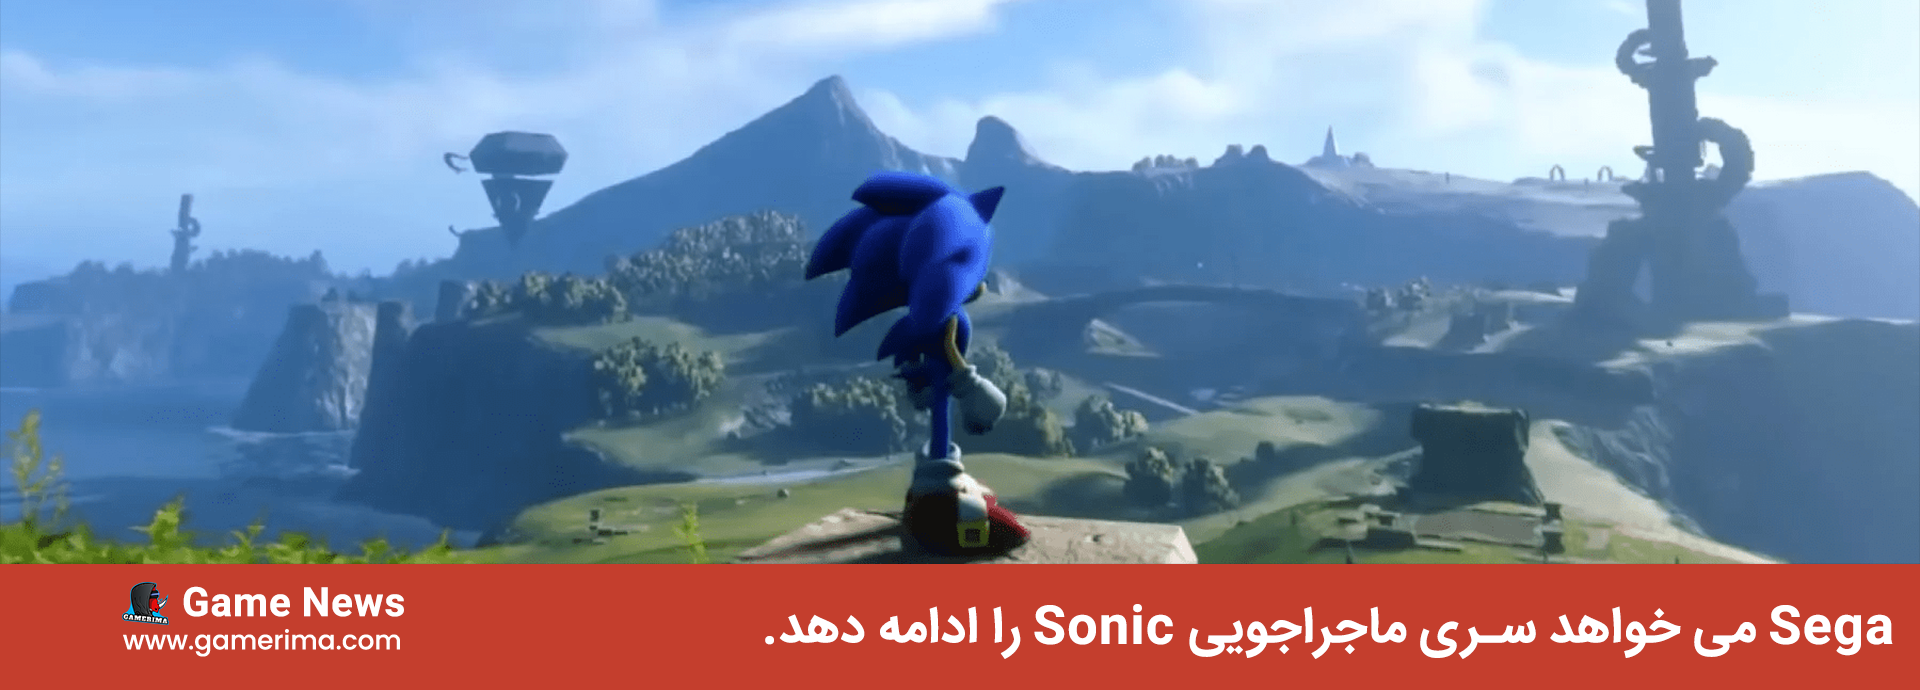 Sega می خواهد سری ماجراجویی Sonic را ادامه دهد.